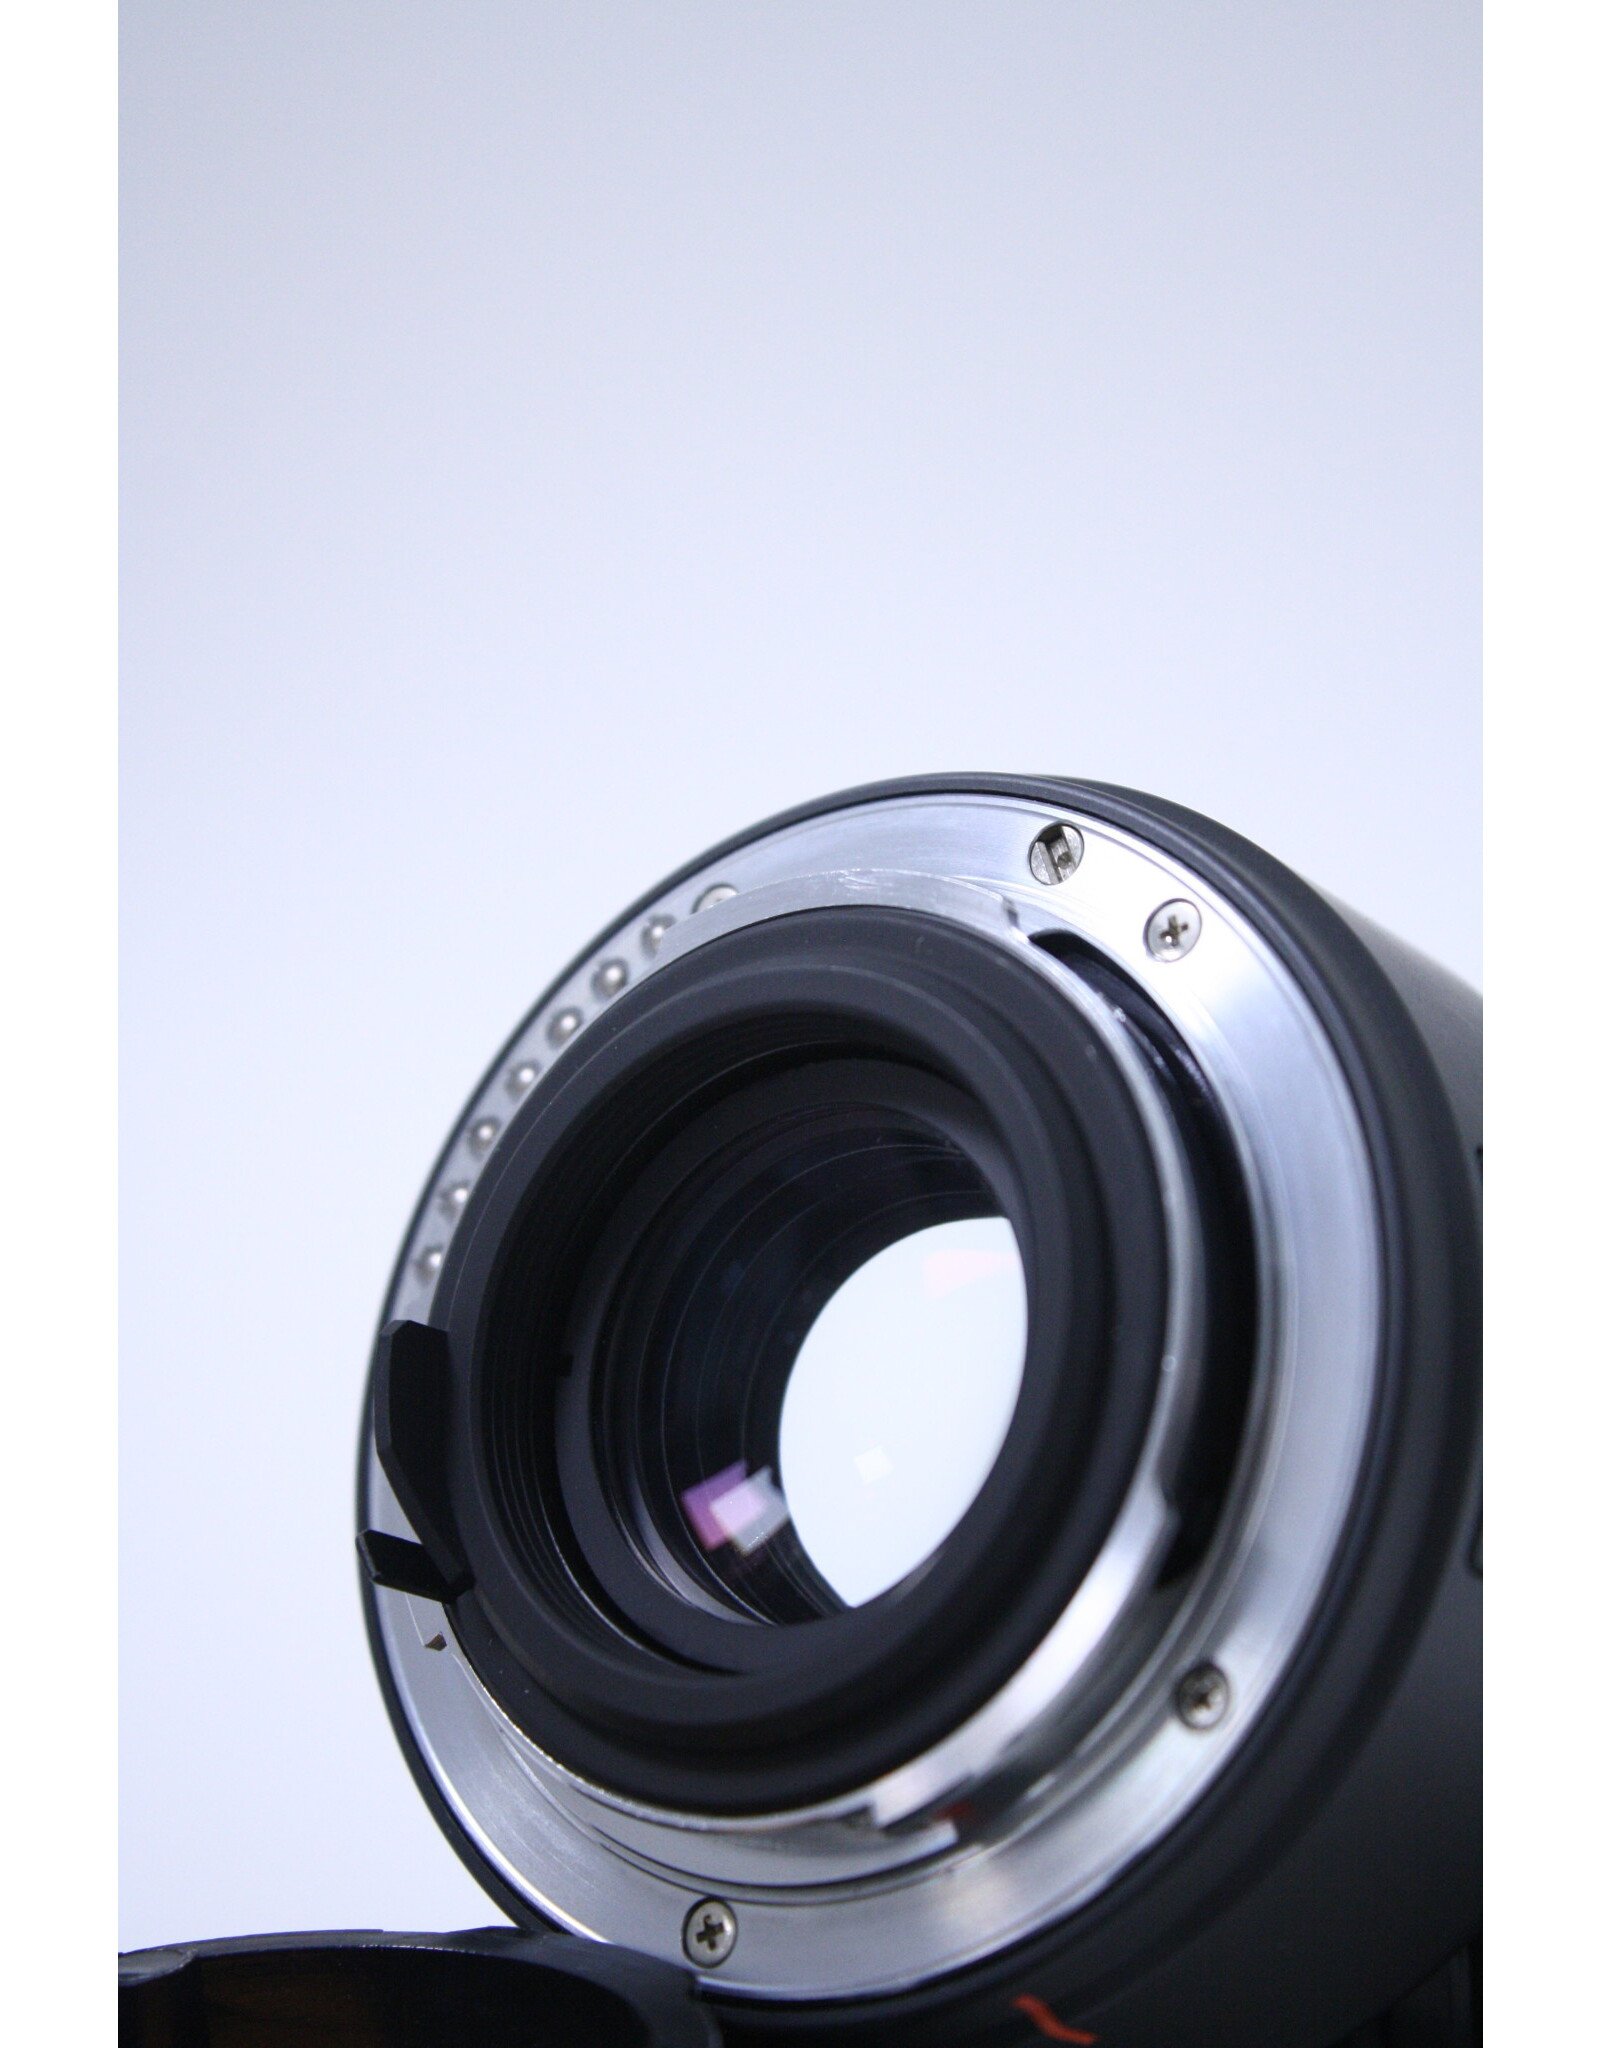 SMC PENTAX F 1.7X AF ADAPTER テレコンバーター - レンズ(単焦点)